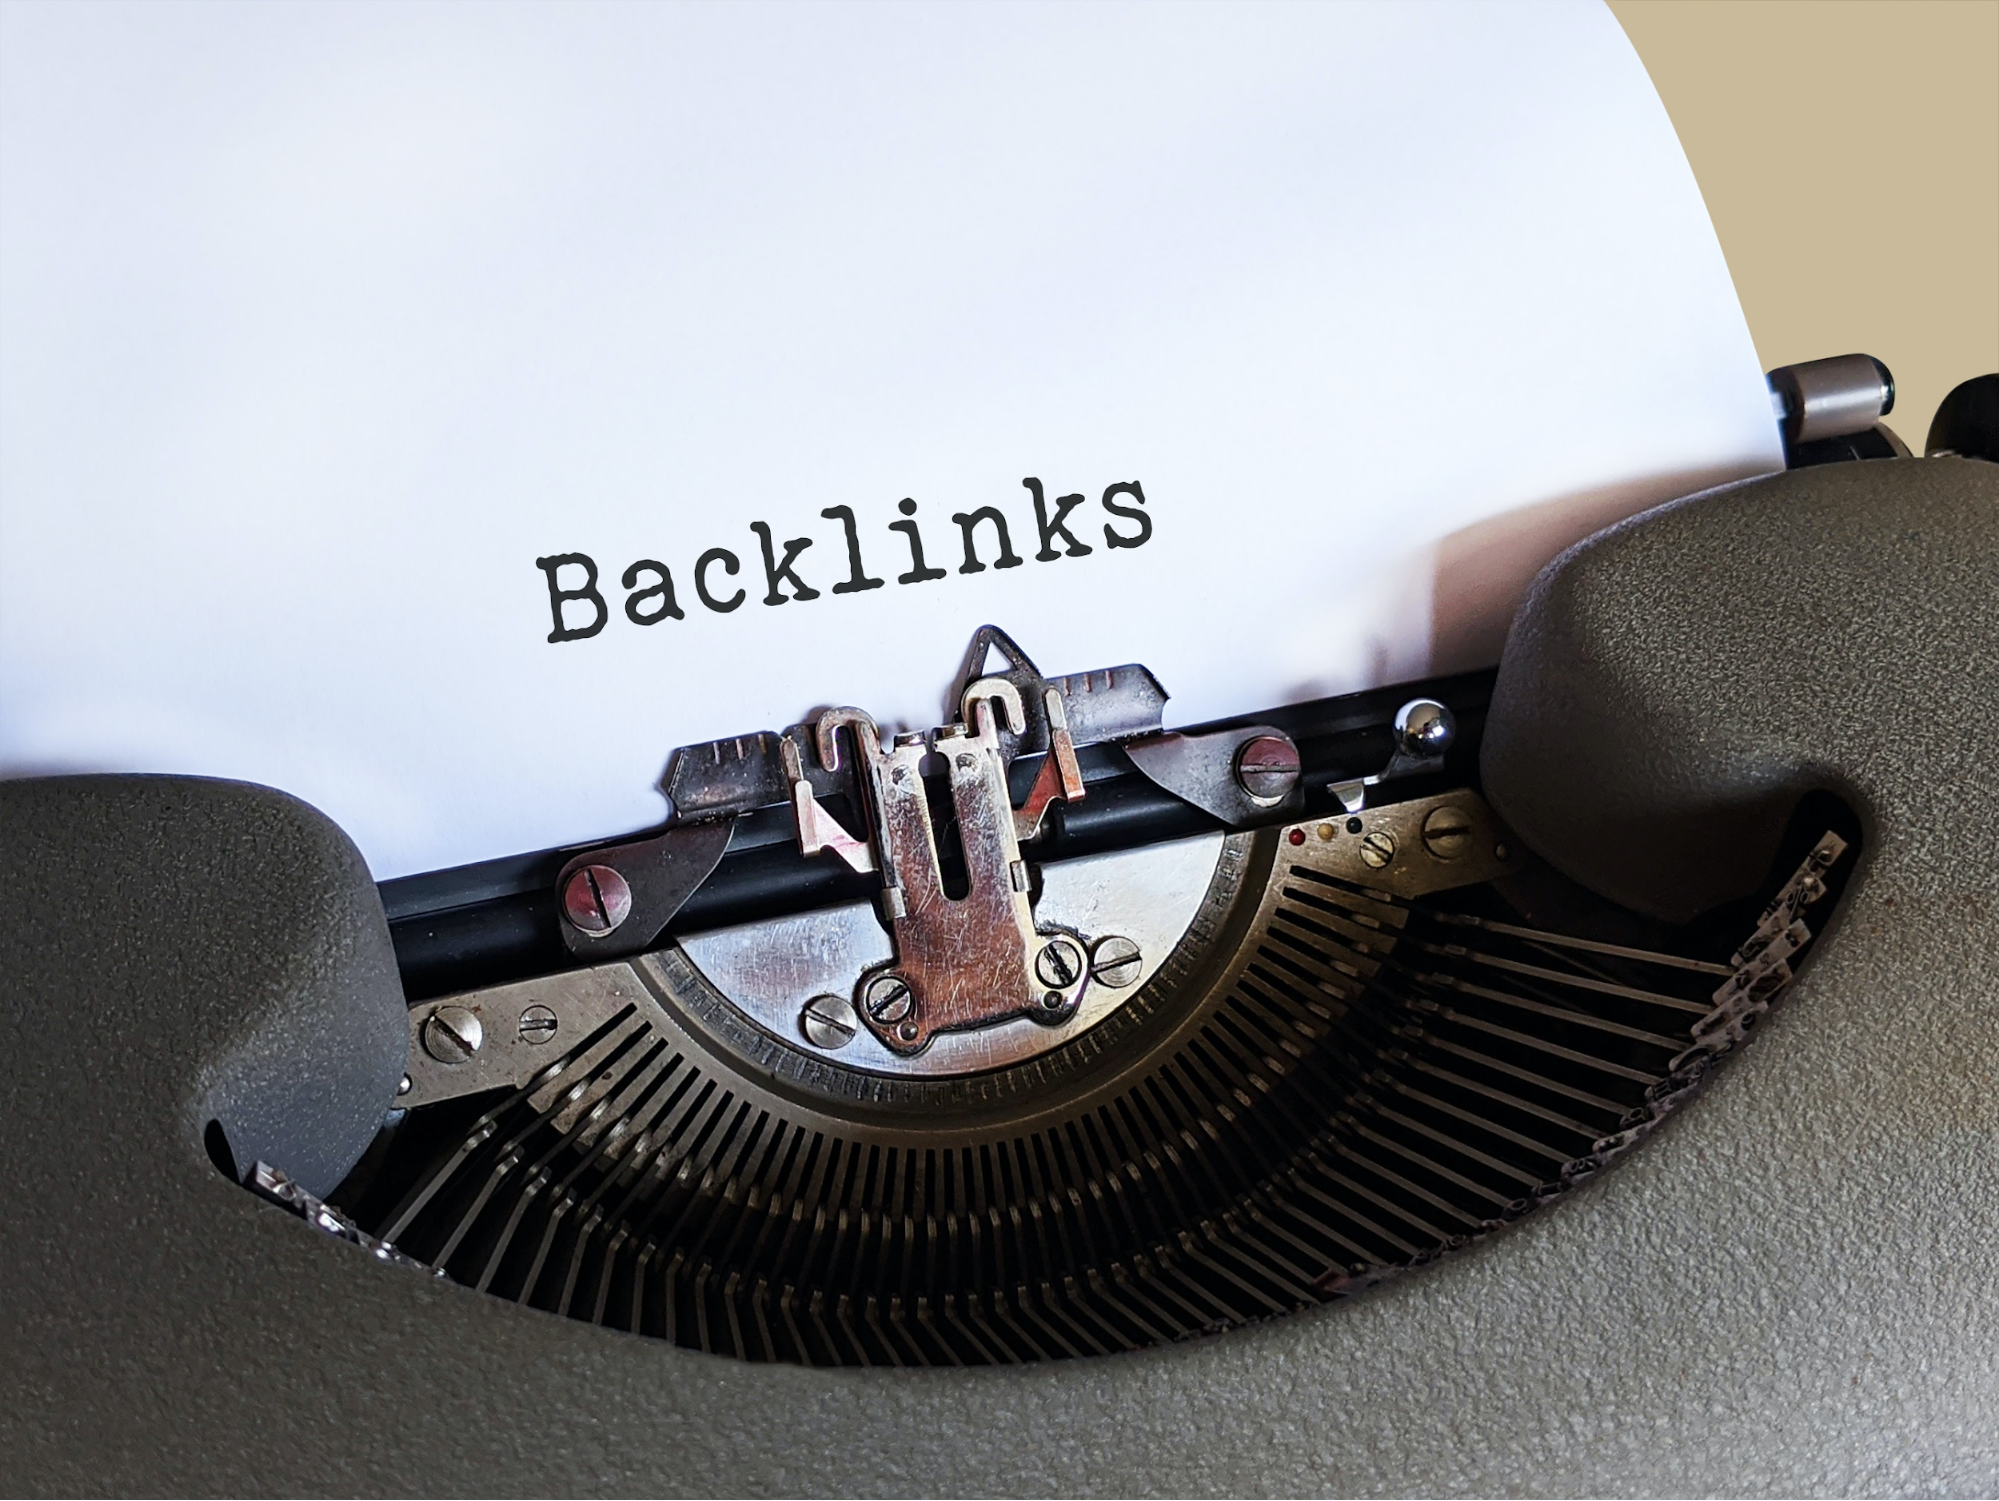 backlinks written on a white paper